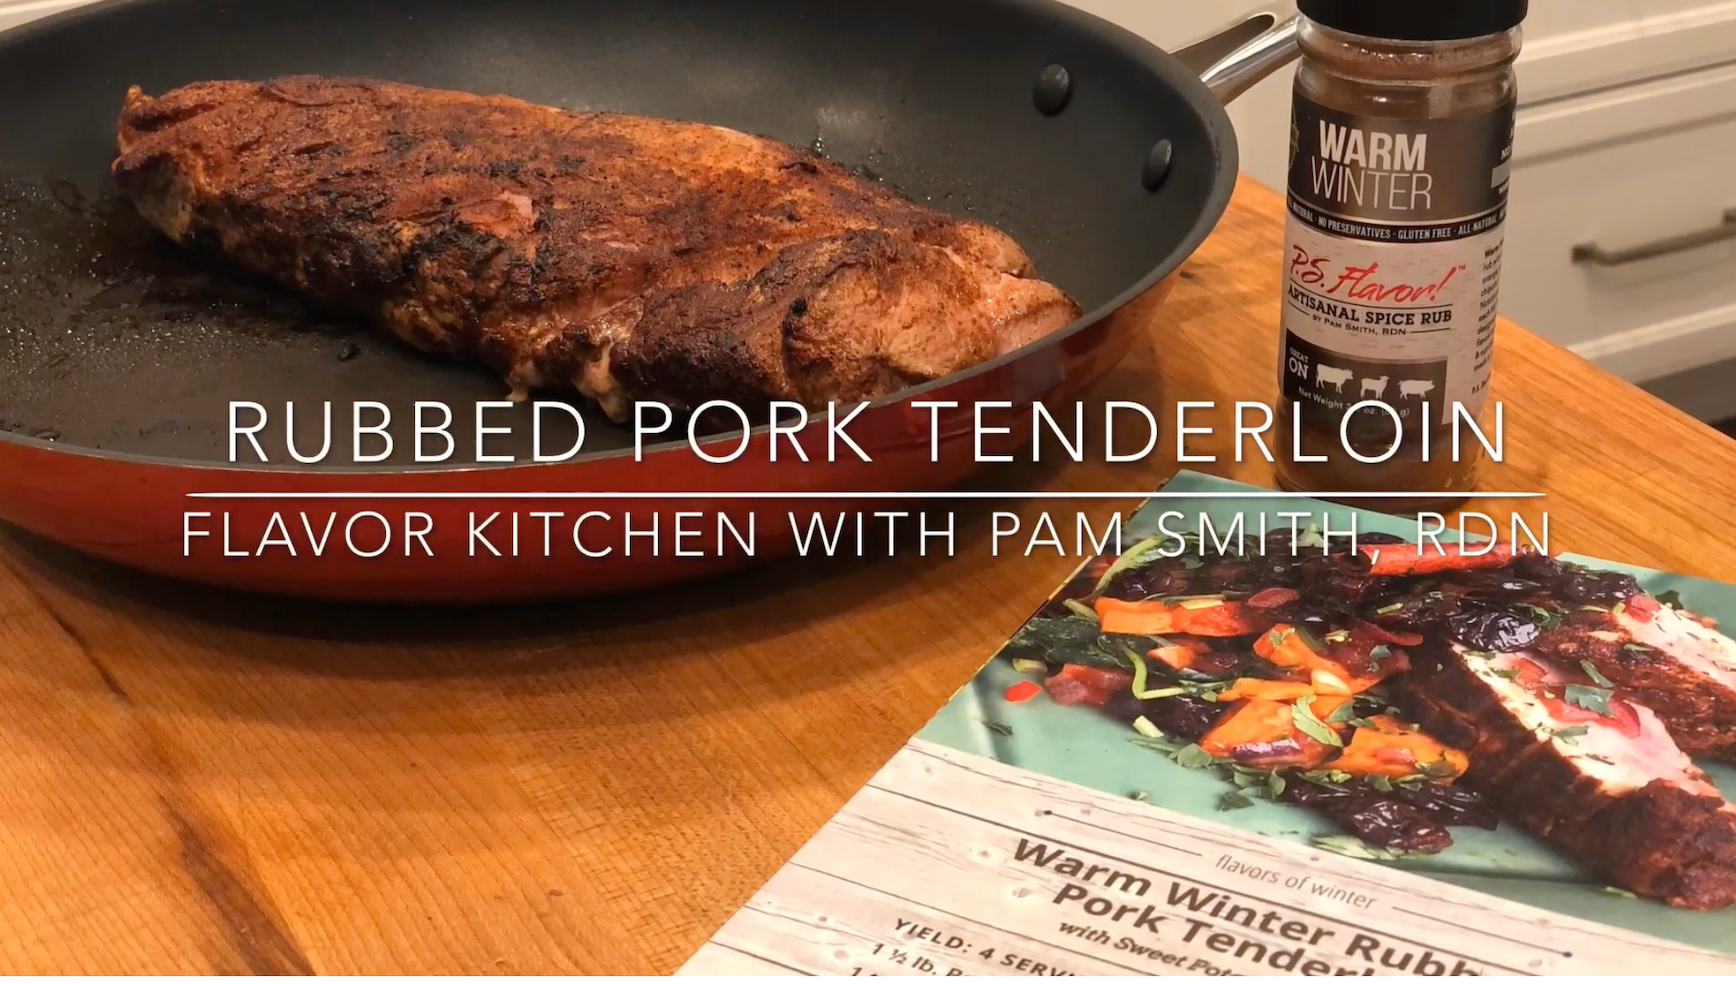 Load video: Video of Pam Smith, RDN preparing Spice-Rubbed Pork Tenderloin